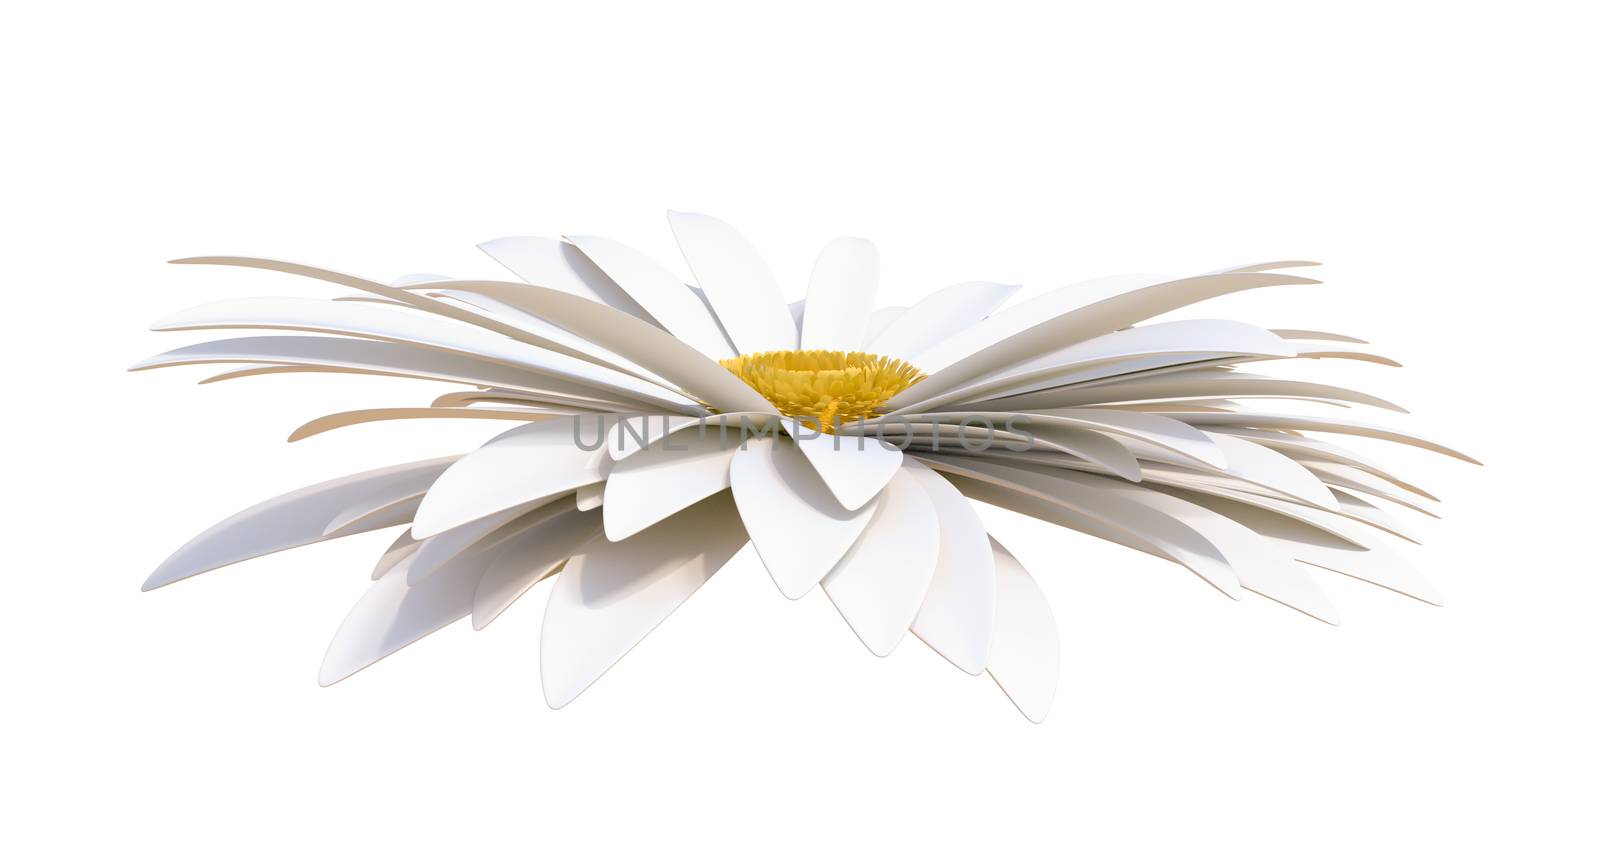 Chamomile flower isolated on white background. 3D illustration